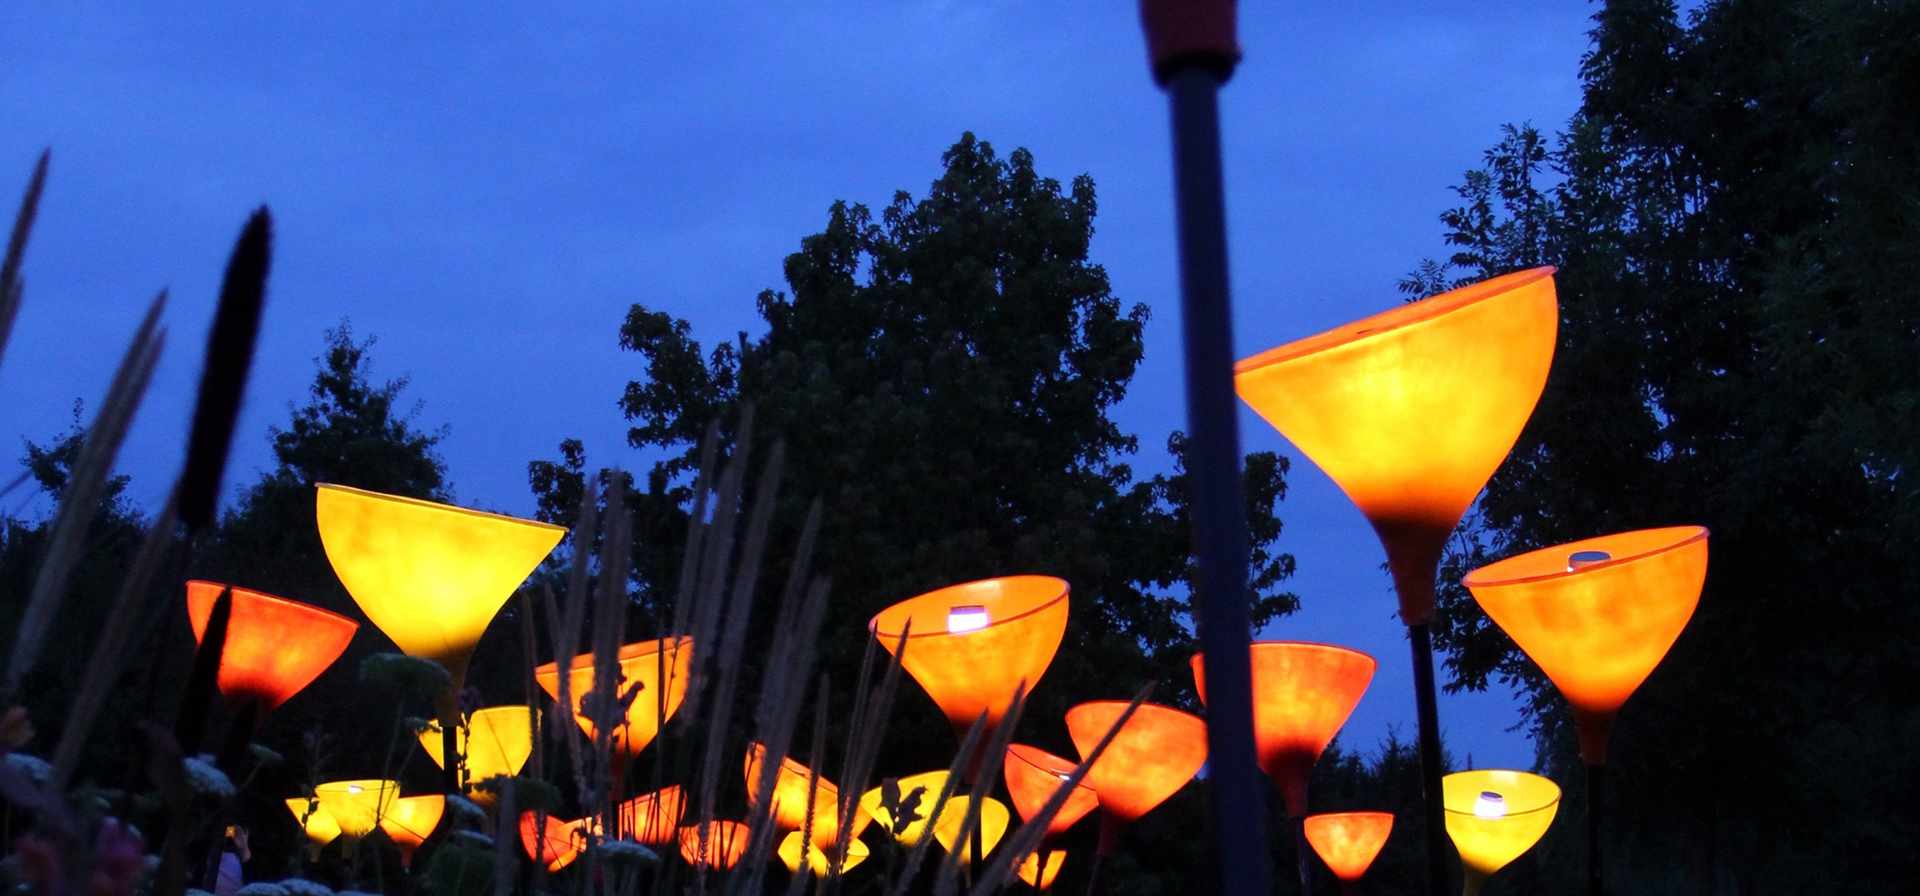 Illumination - Lichtzauber im Park